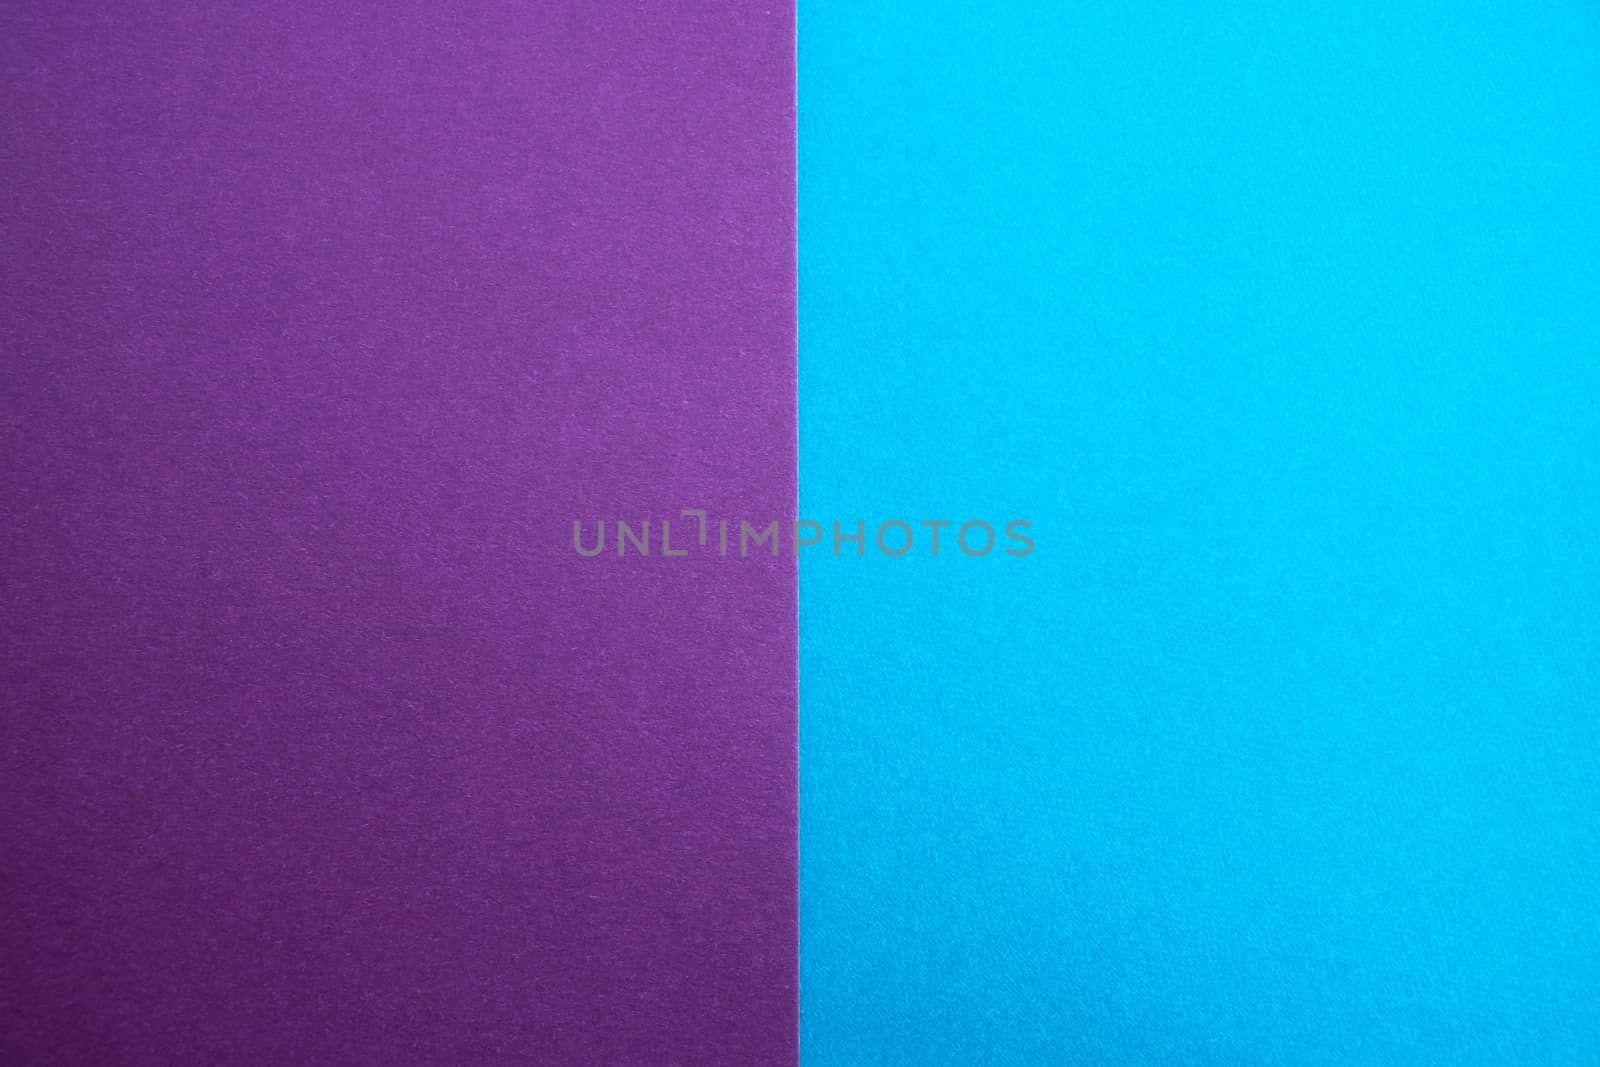 blue-purple matte suede background, close-up. Velvety texture